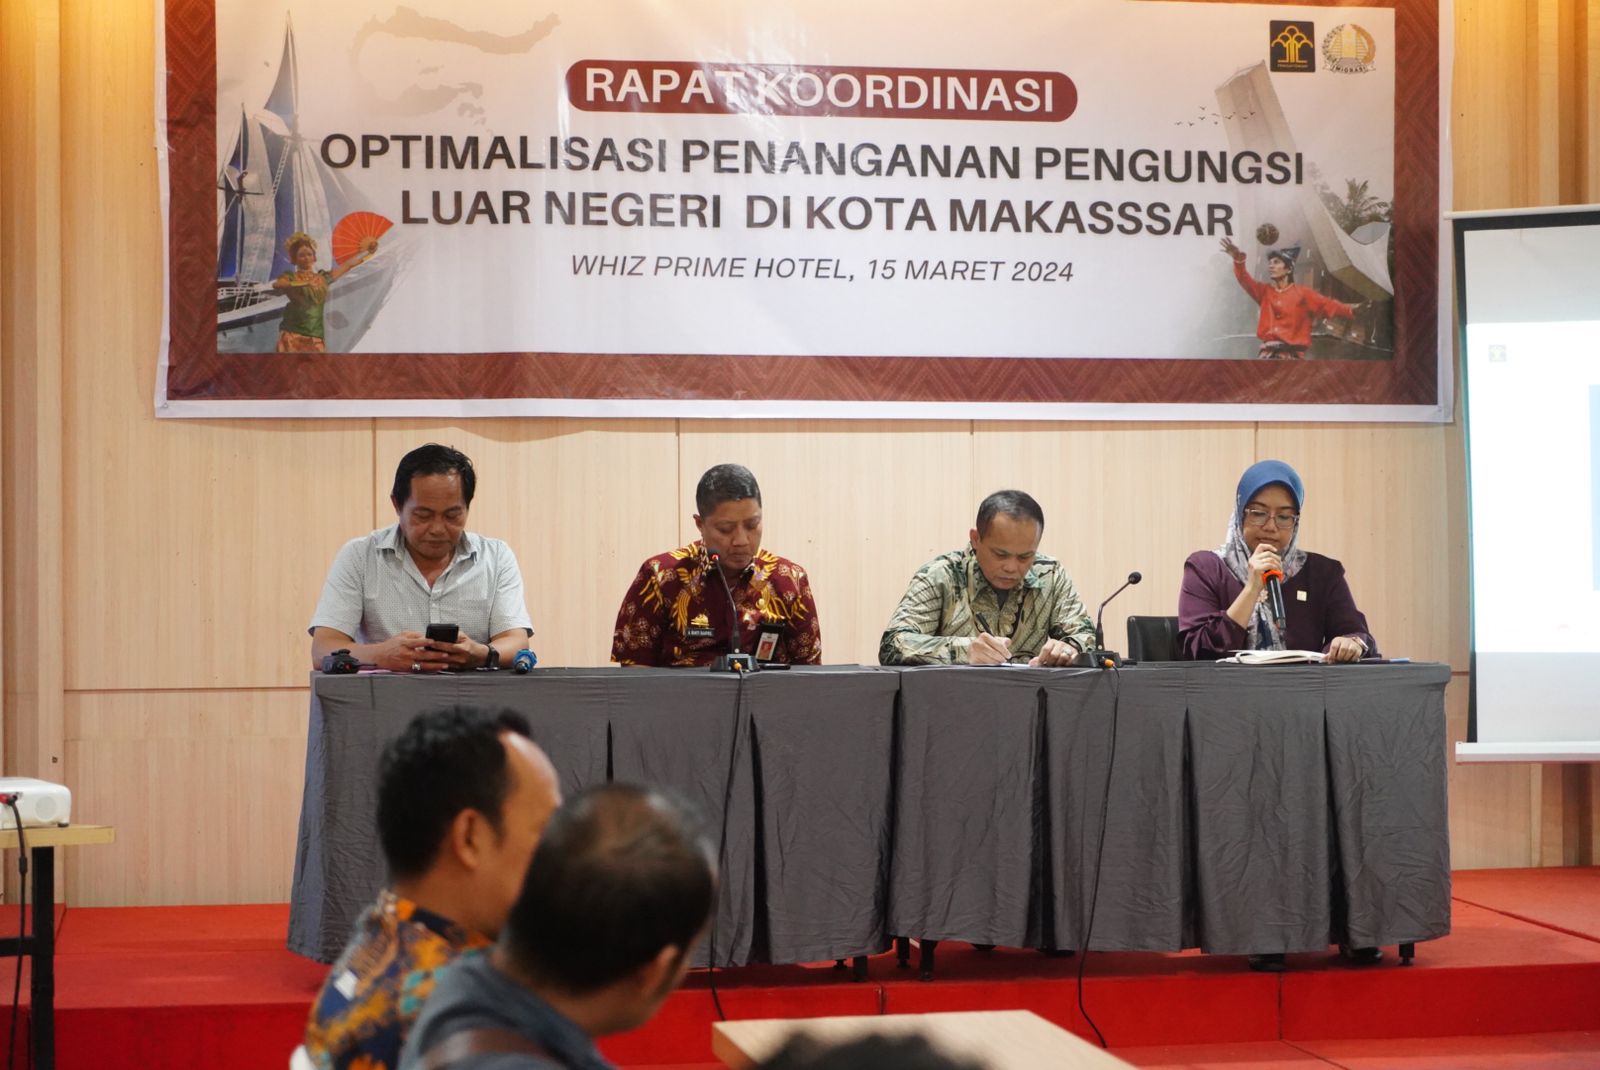 Optimalisasi Penanganan Pengungsi Luar Negeri di Kota Makassar Dibahas dalam Rapat Koordinasi